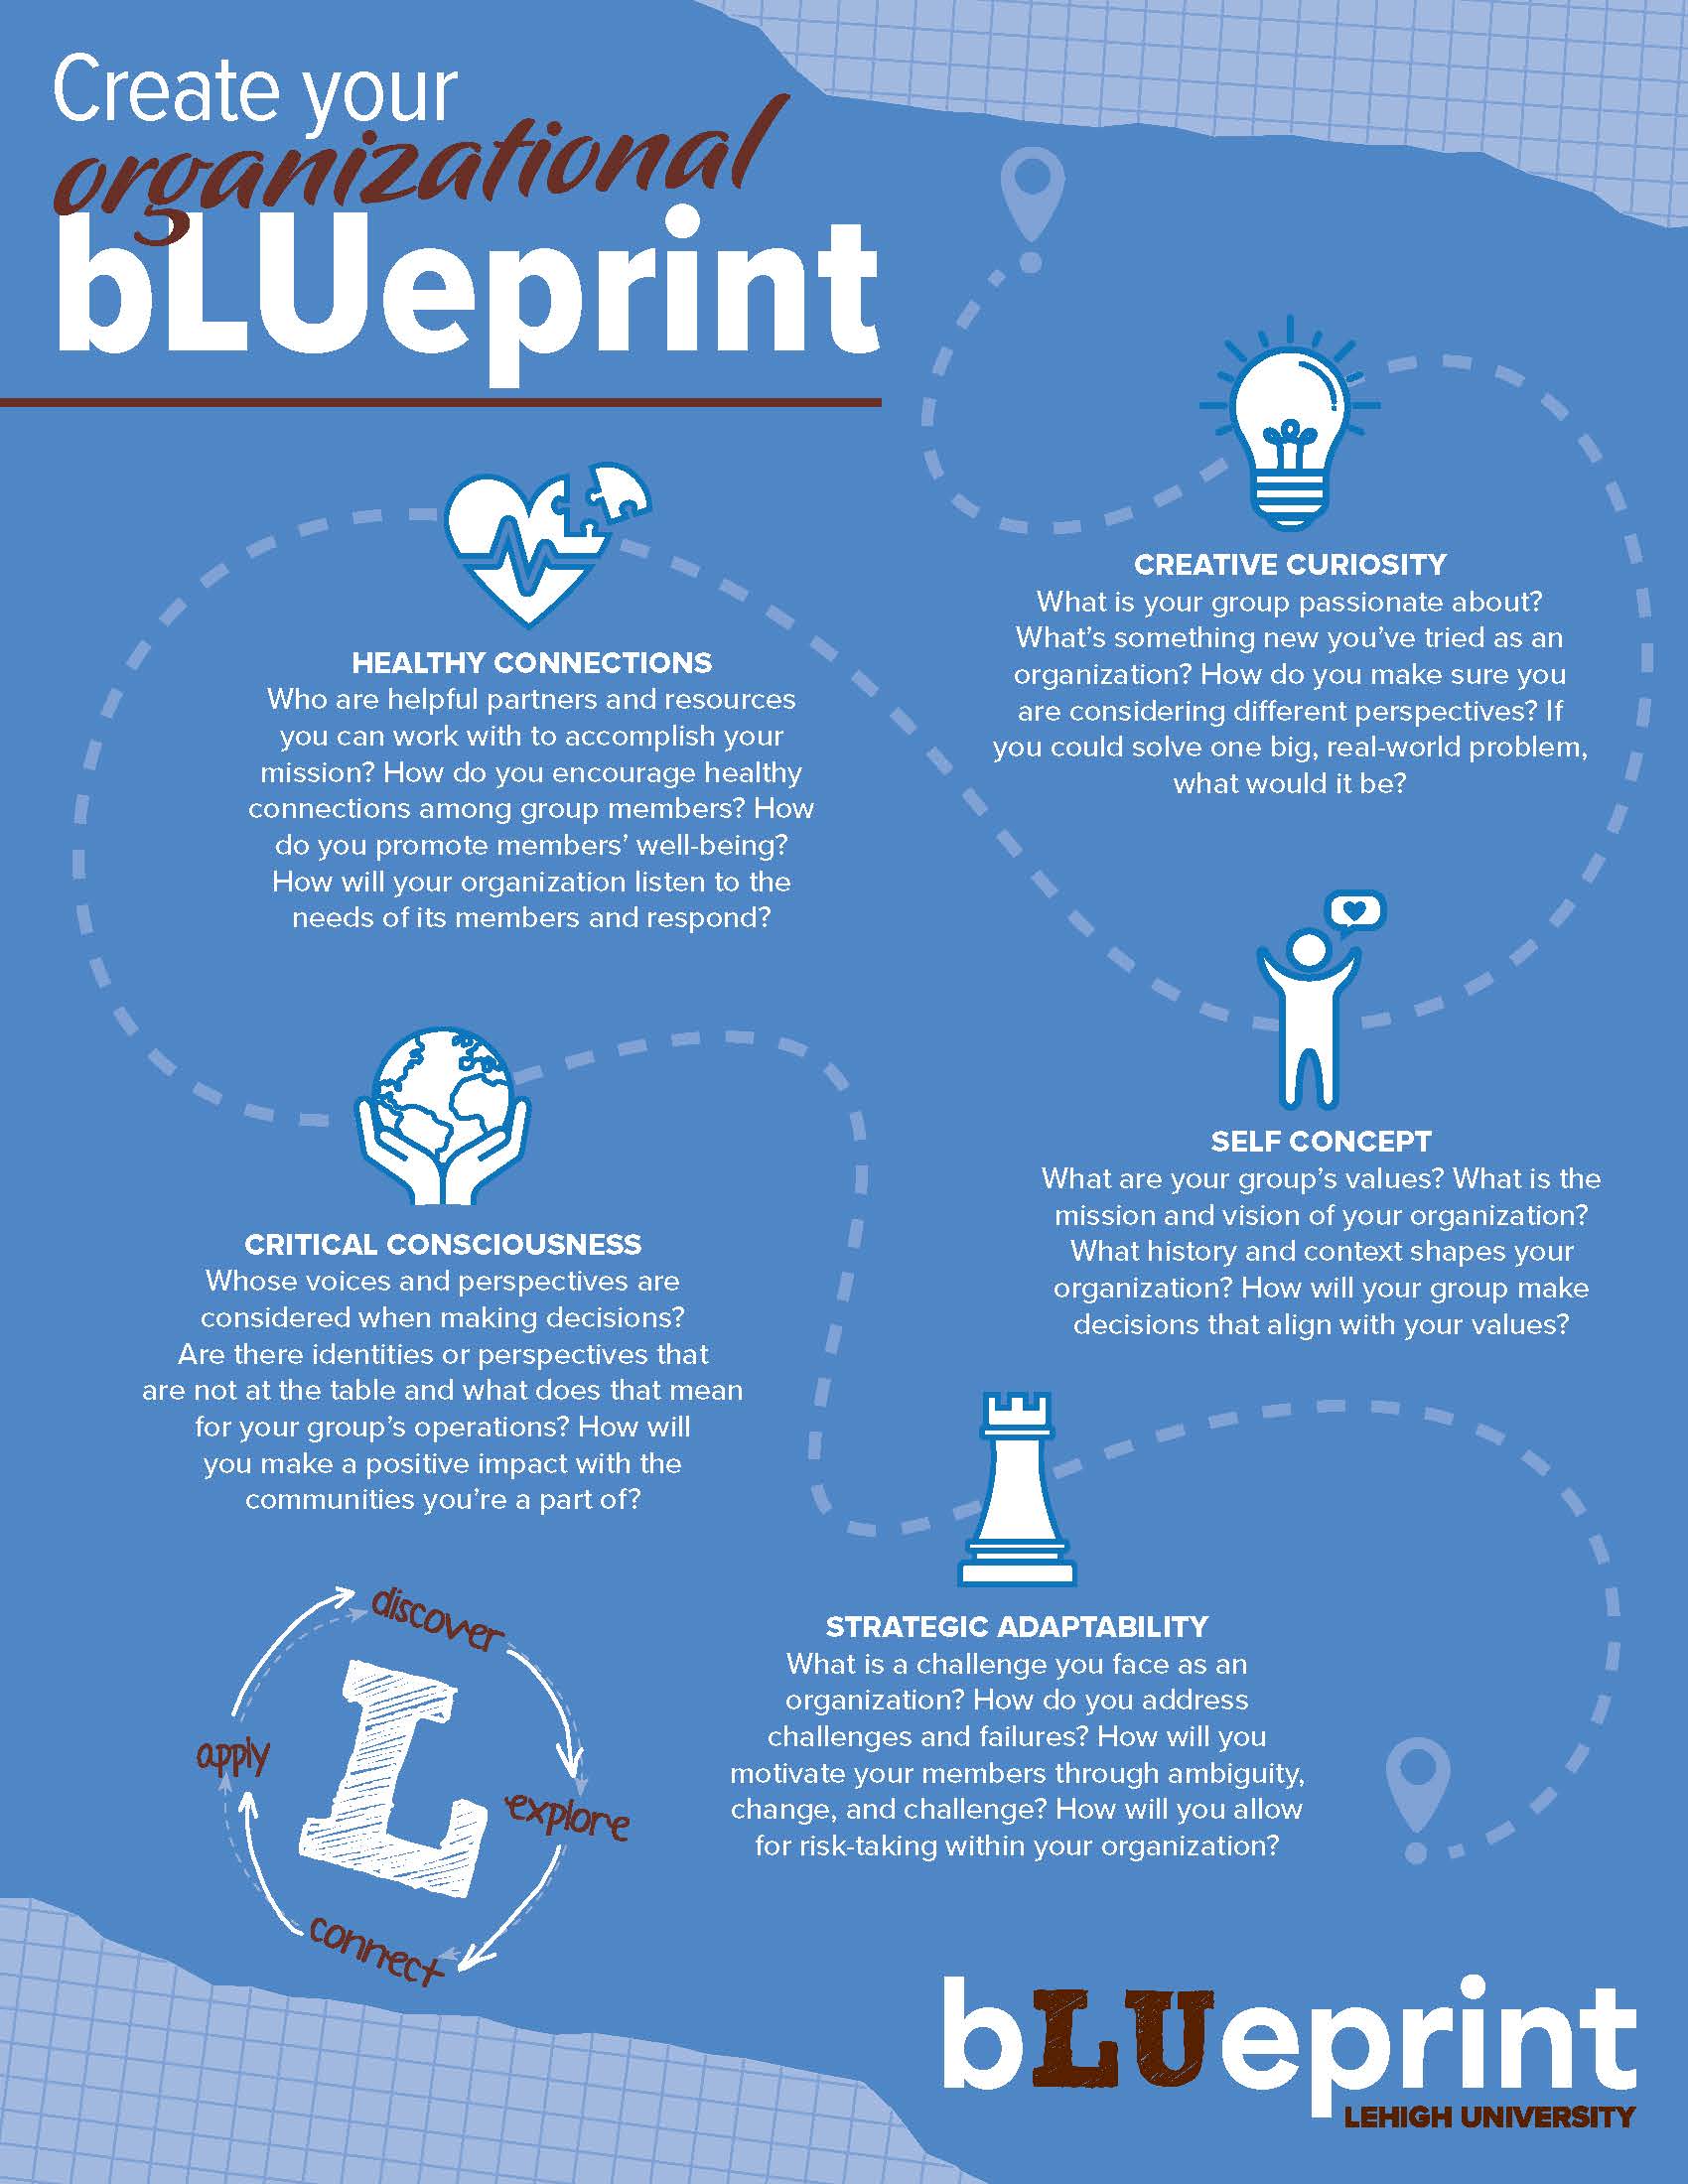 For an accessible document, please email blueprint@lehigh.edu